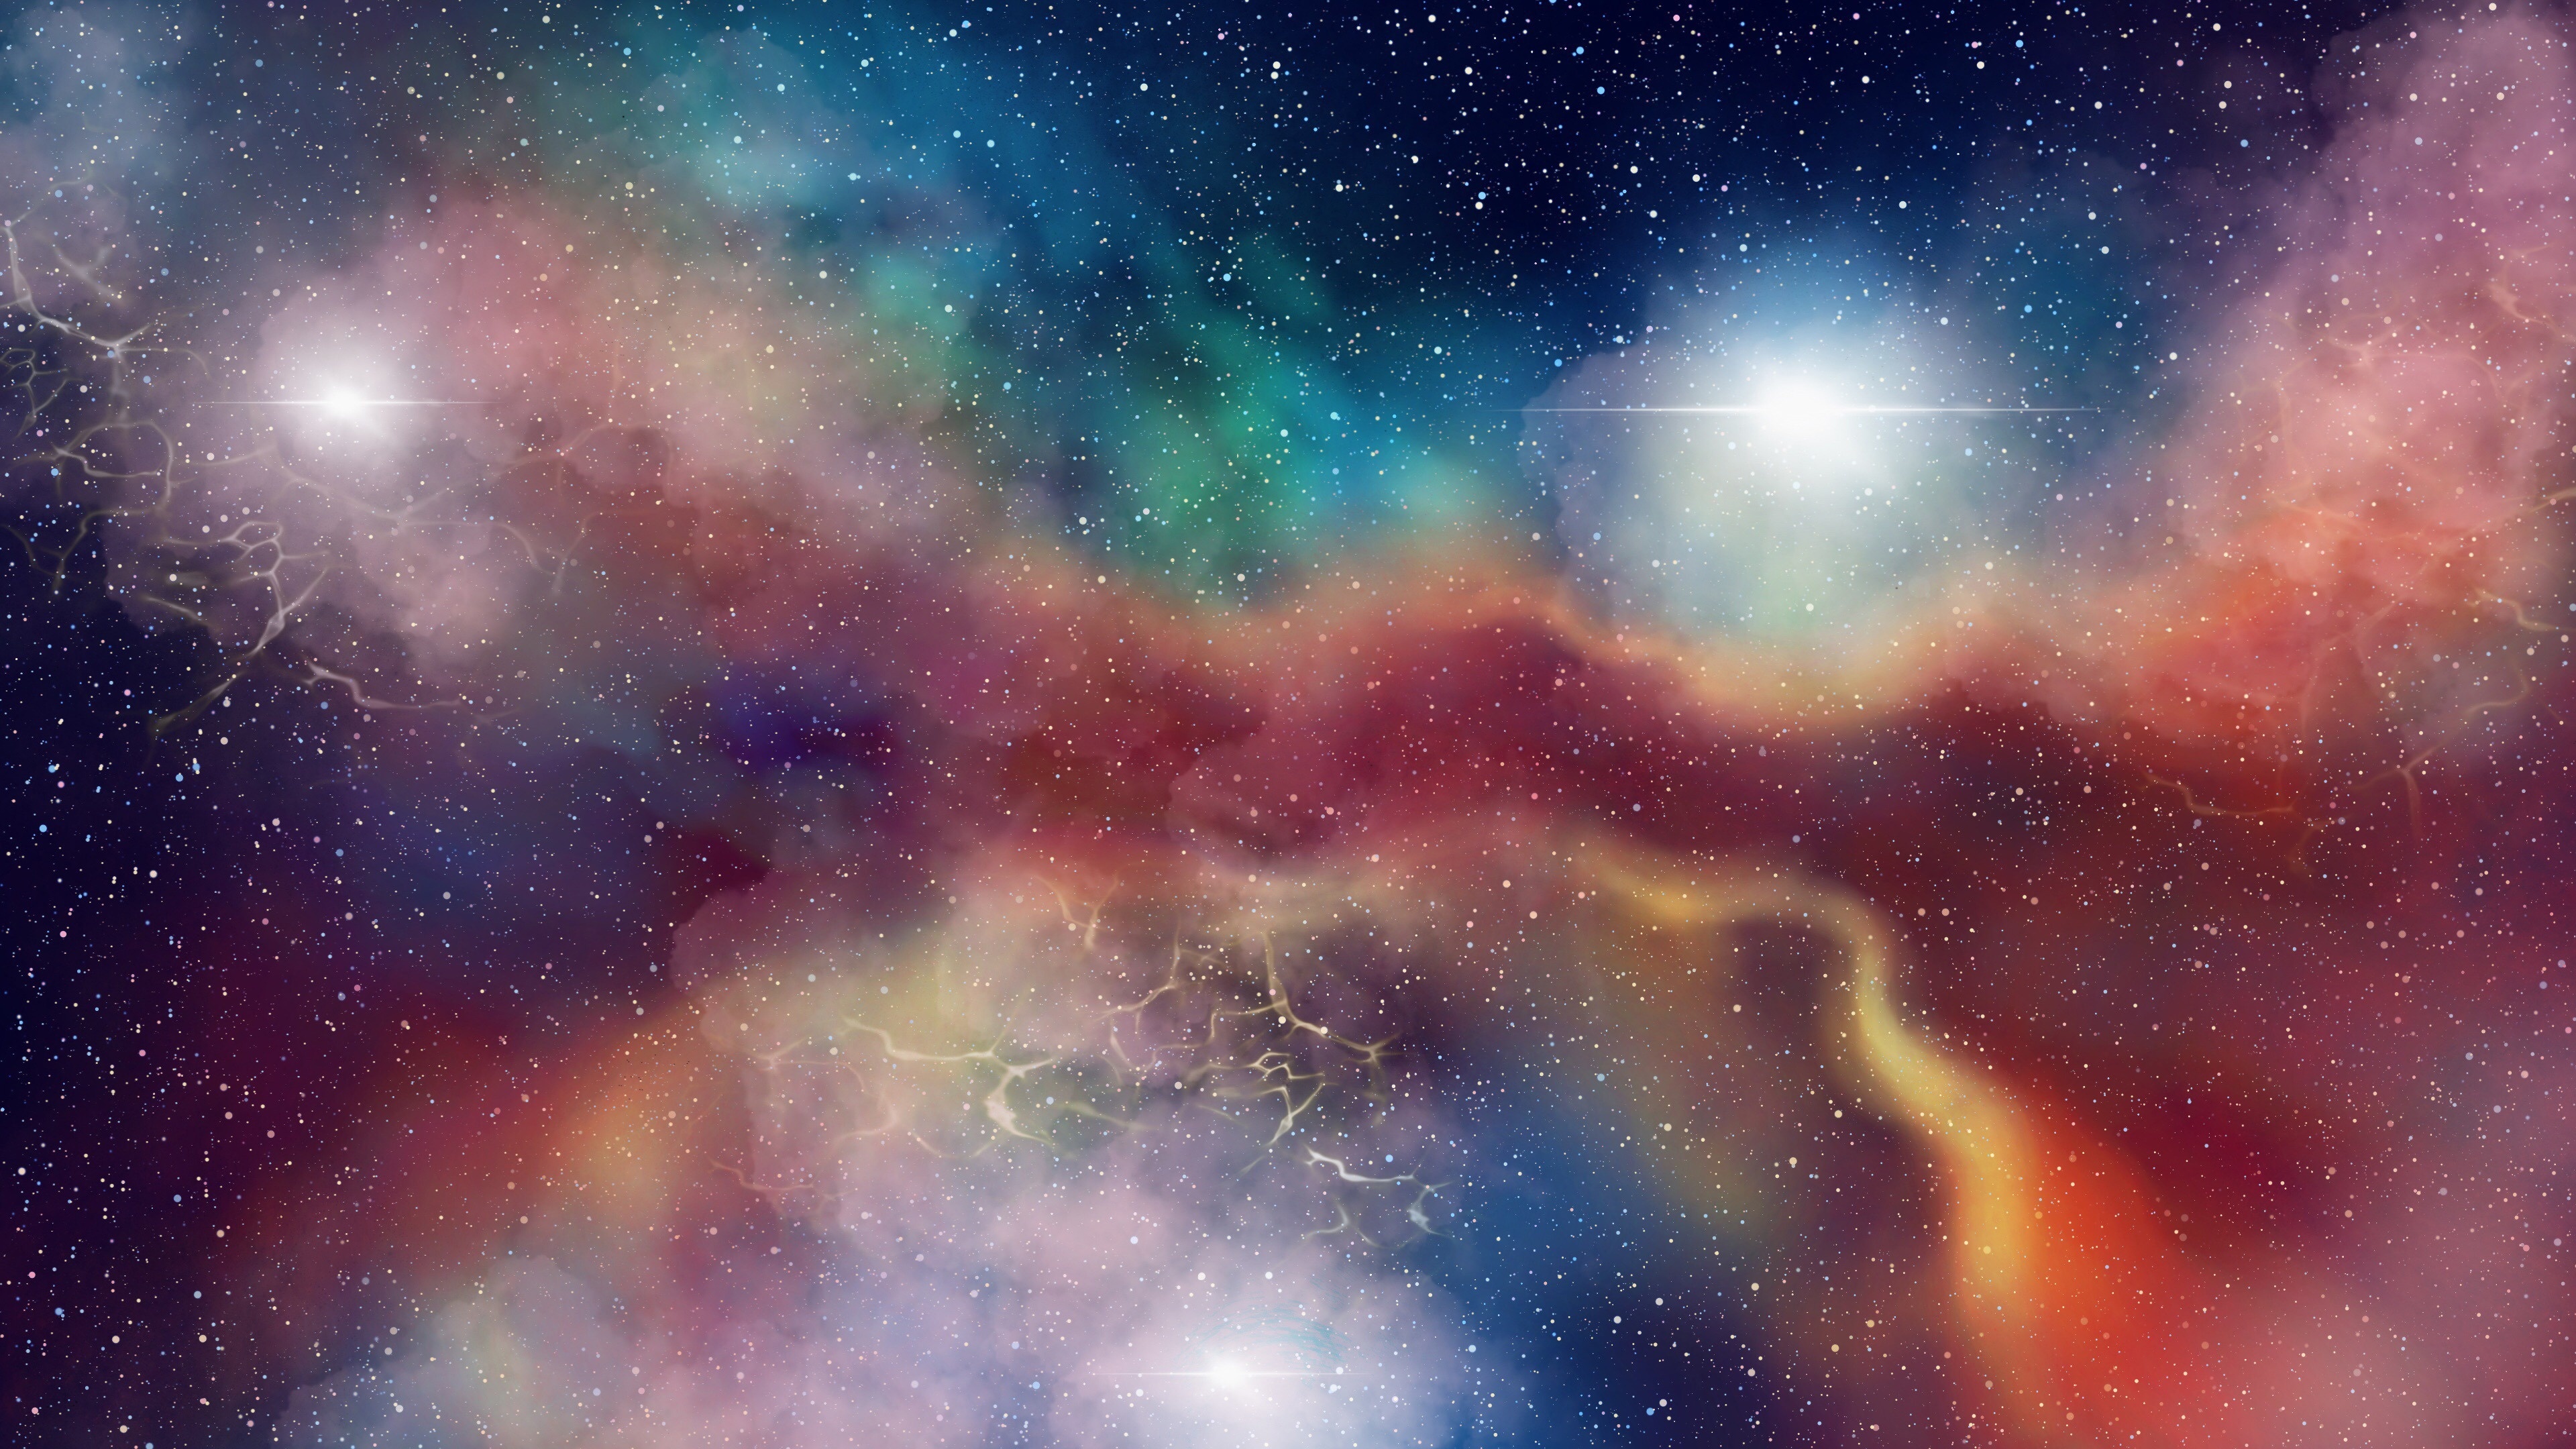 Universe Wallpaper 4k on Windows PC Download Free - 1.03 -  com.UniverseWallpaper.earth.nebula.wallpaper